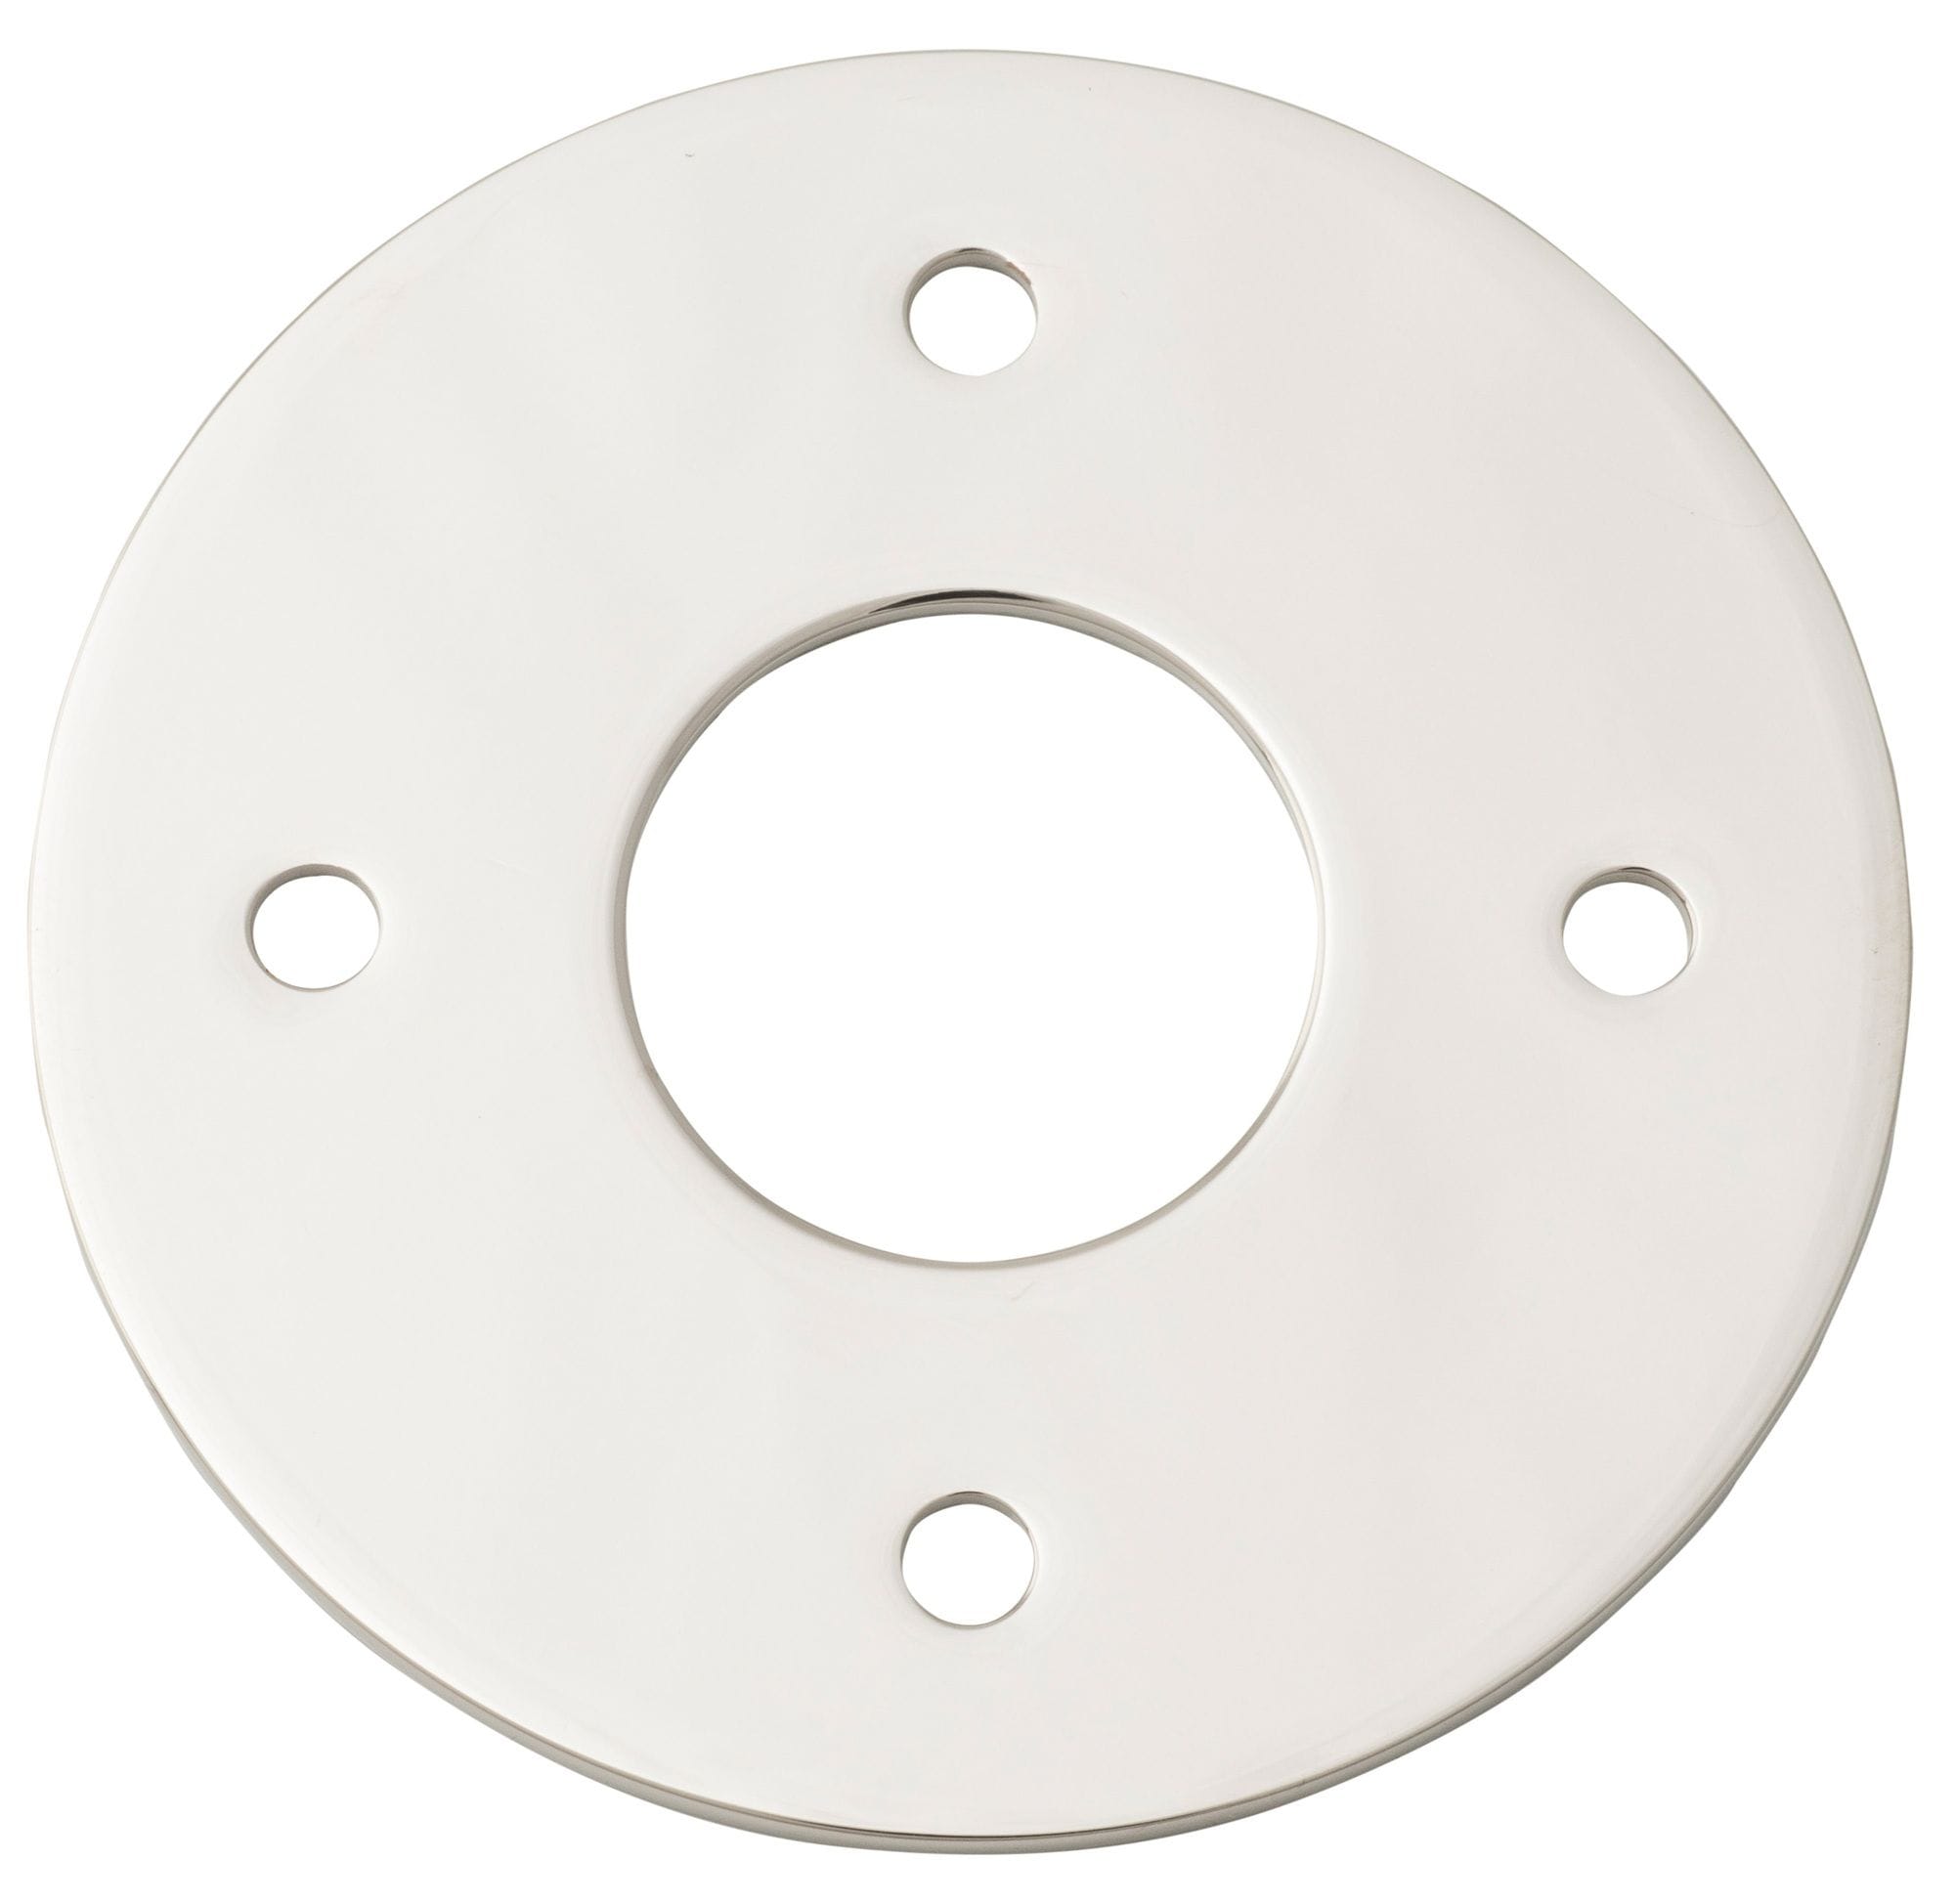 Adaptor Plate (Pair) Round Polished Nickel